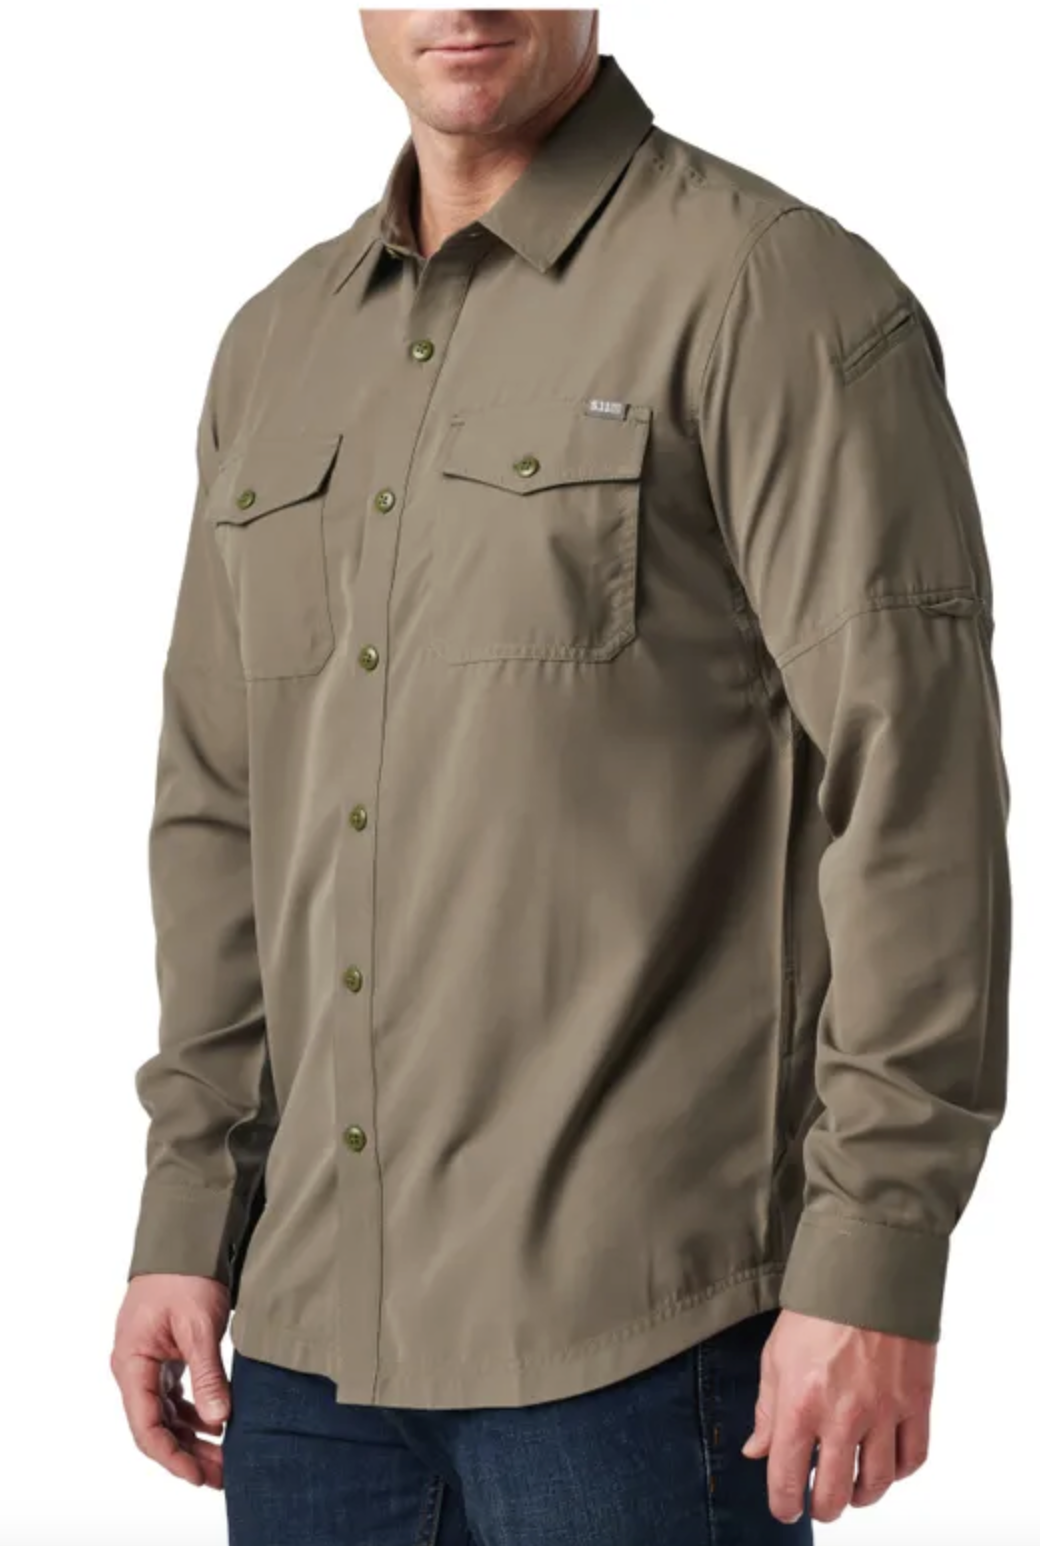 5.11 - Marksman Long Sleeve Shirt UPF 50+ - Sage Green (831)